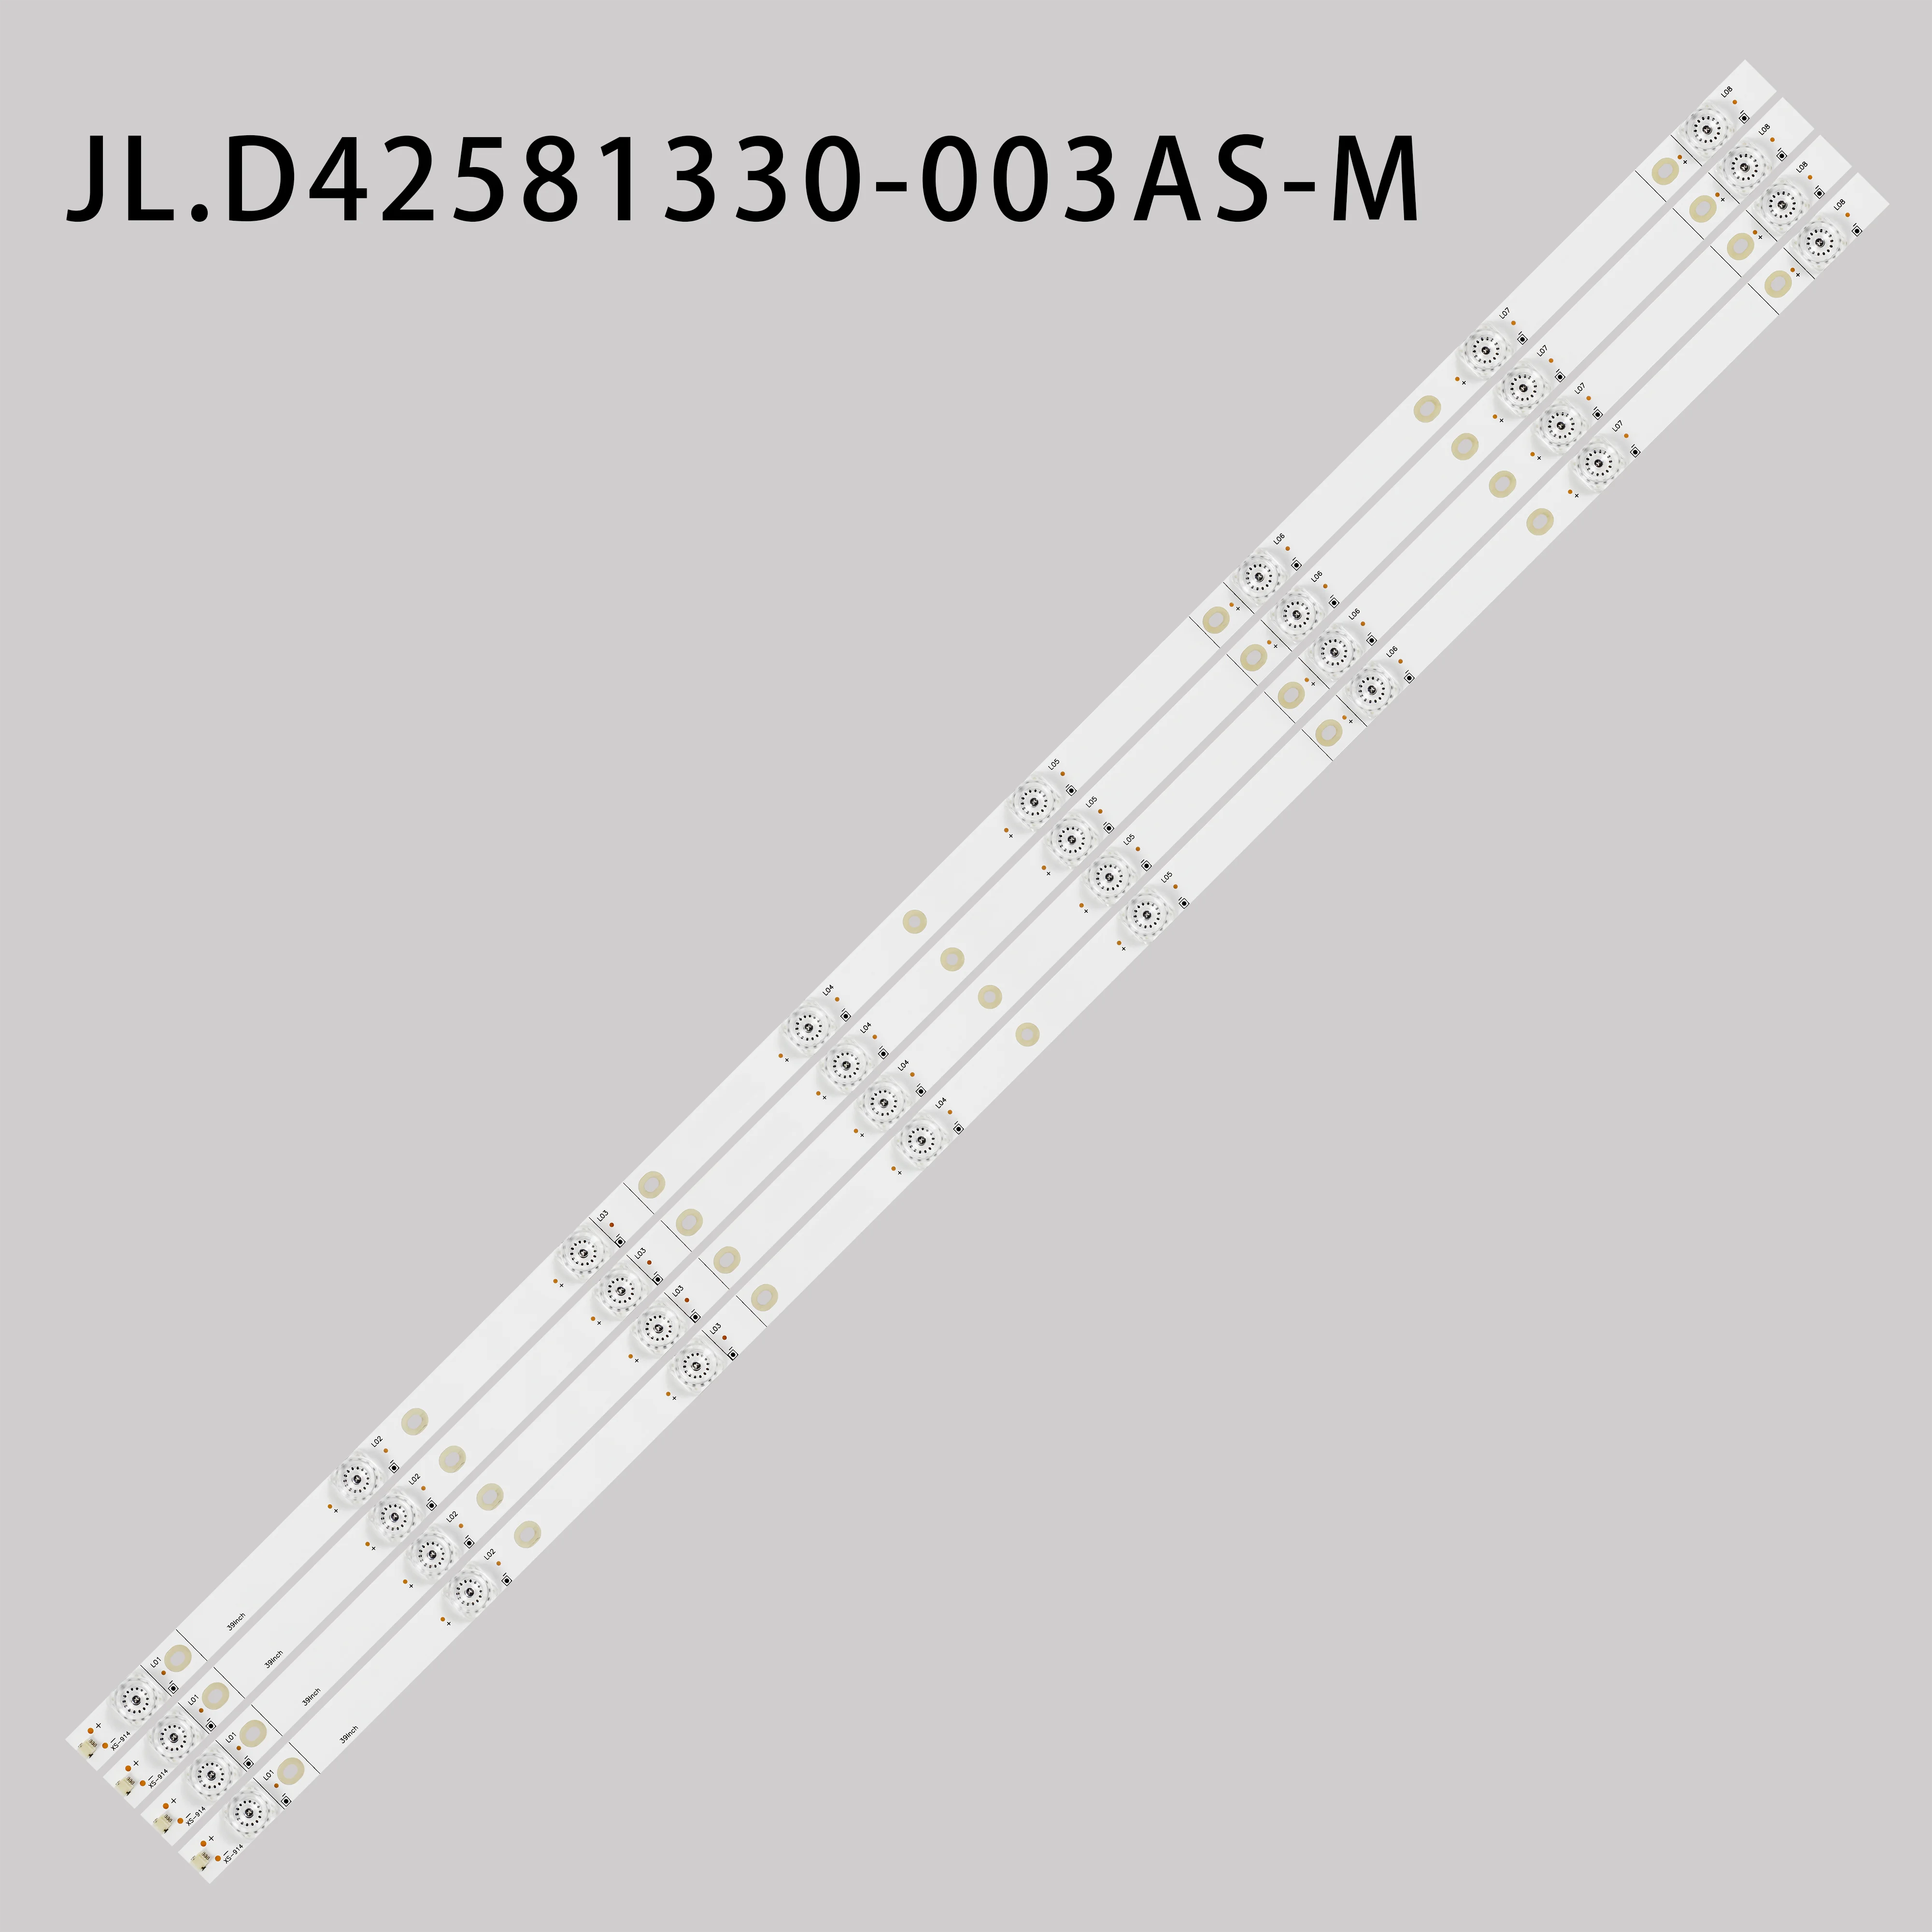 

LED Backlight strip 8 lamp JL.D42581330-003AS-M for Hisense 43'' TV HZ43H50Y H43A6100 43RGE JHD425S1U51-T0 TH-43FX500C